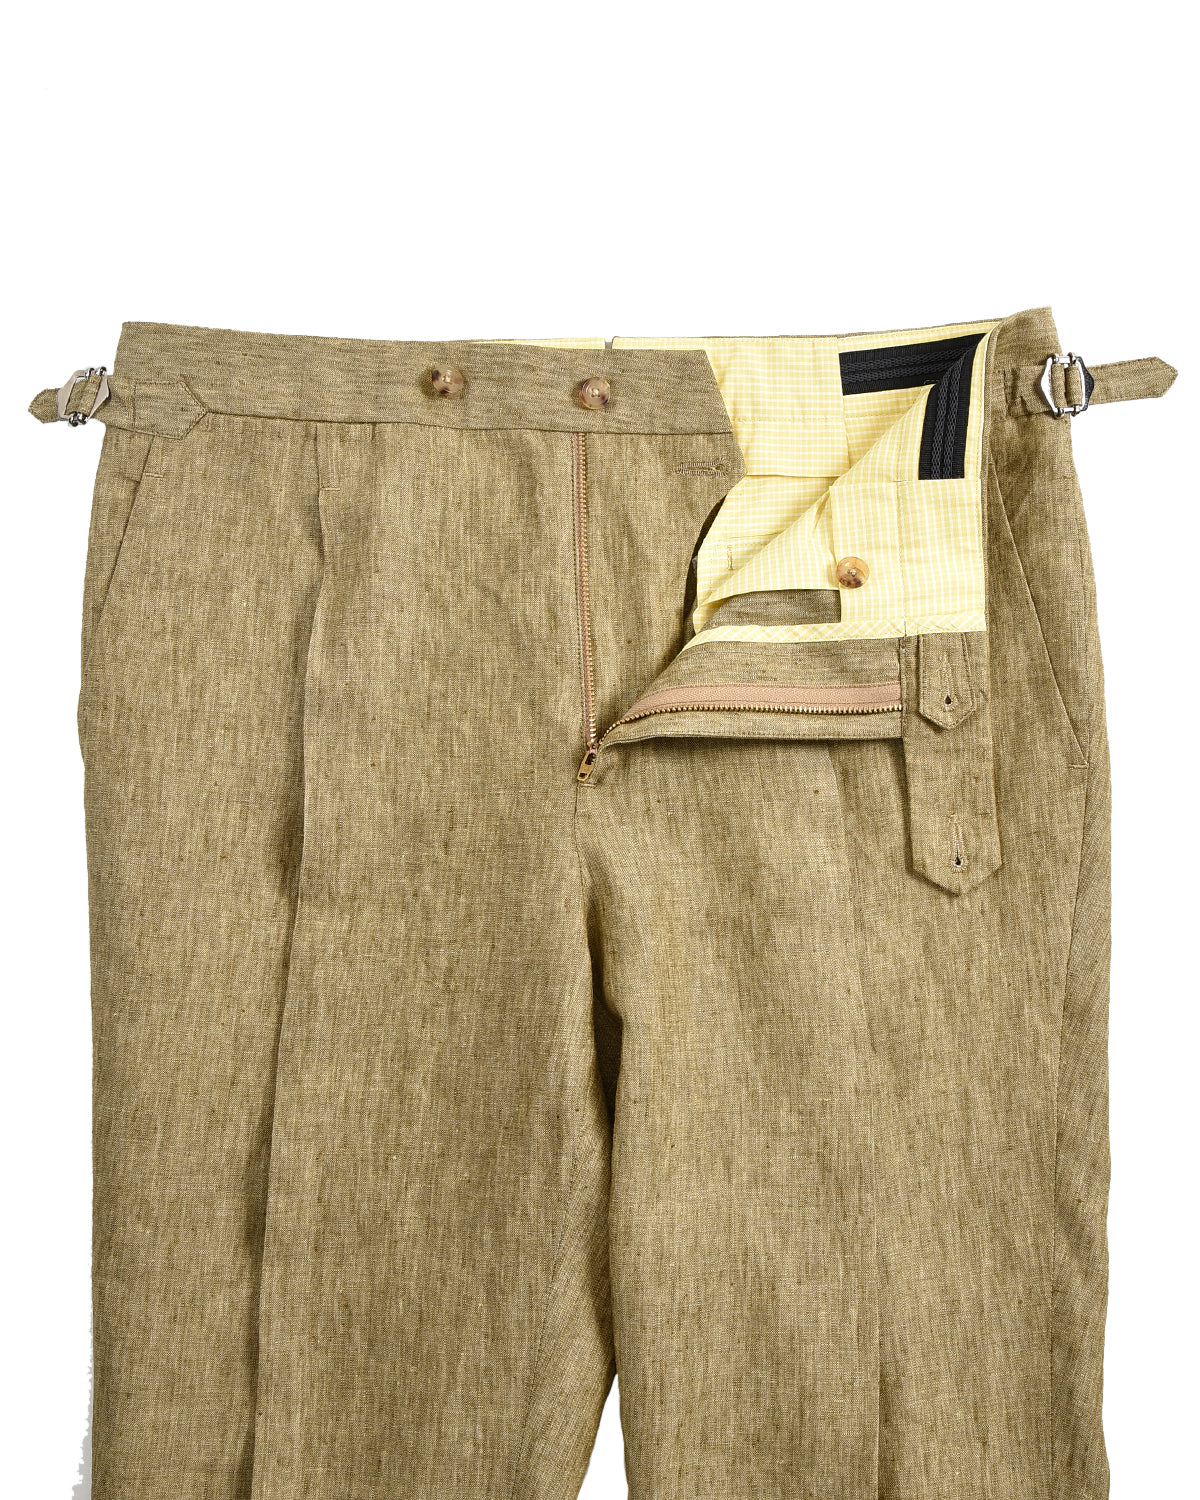 Brown Linen Pant